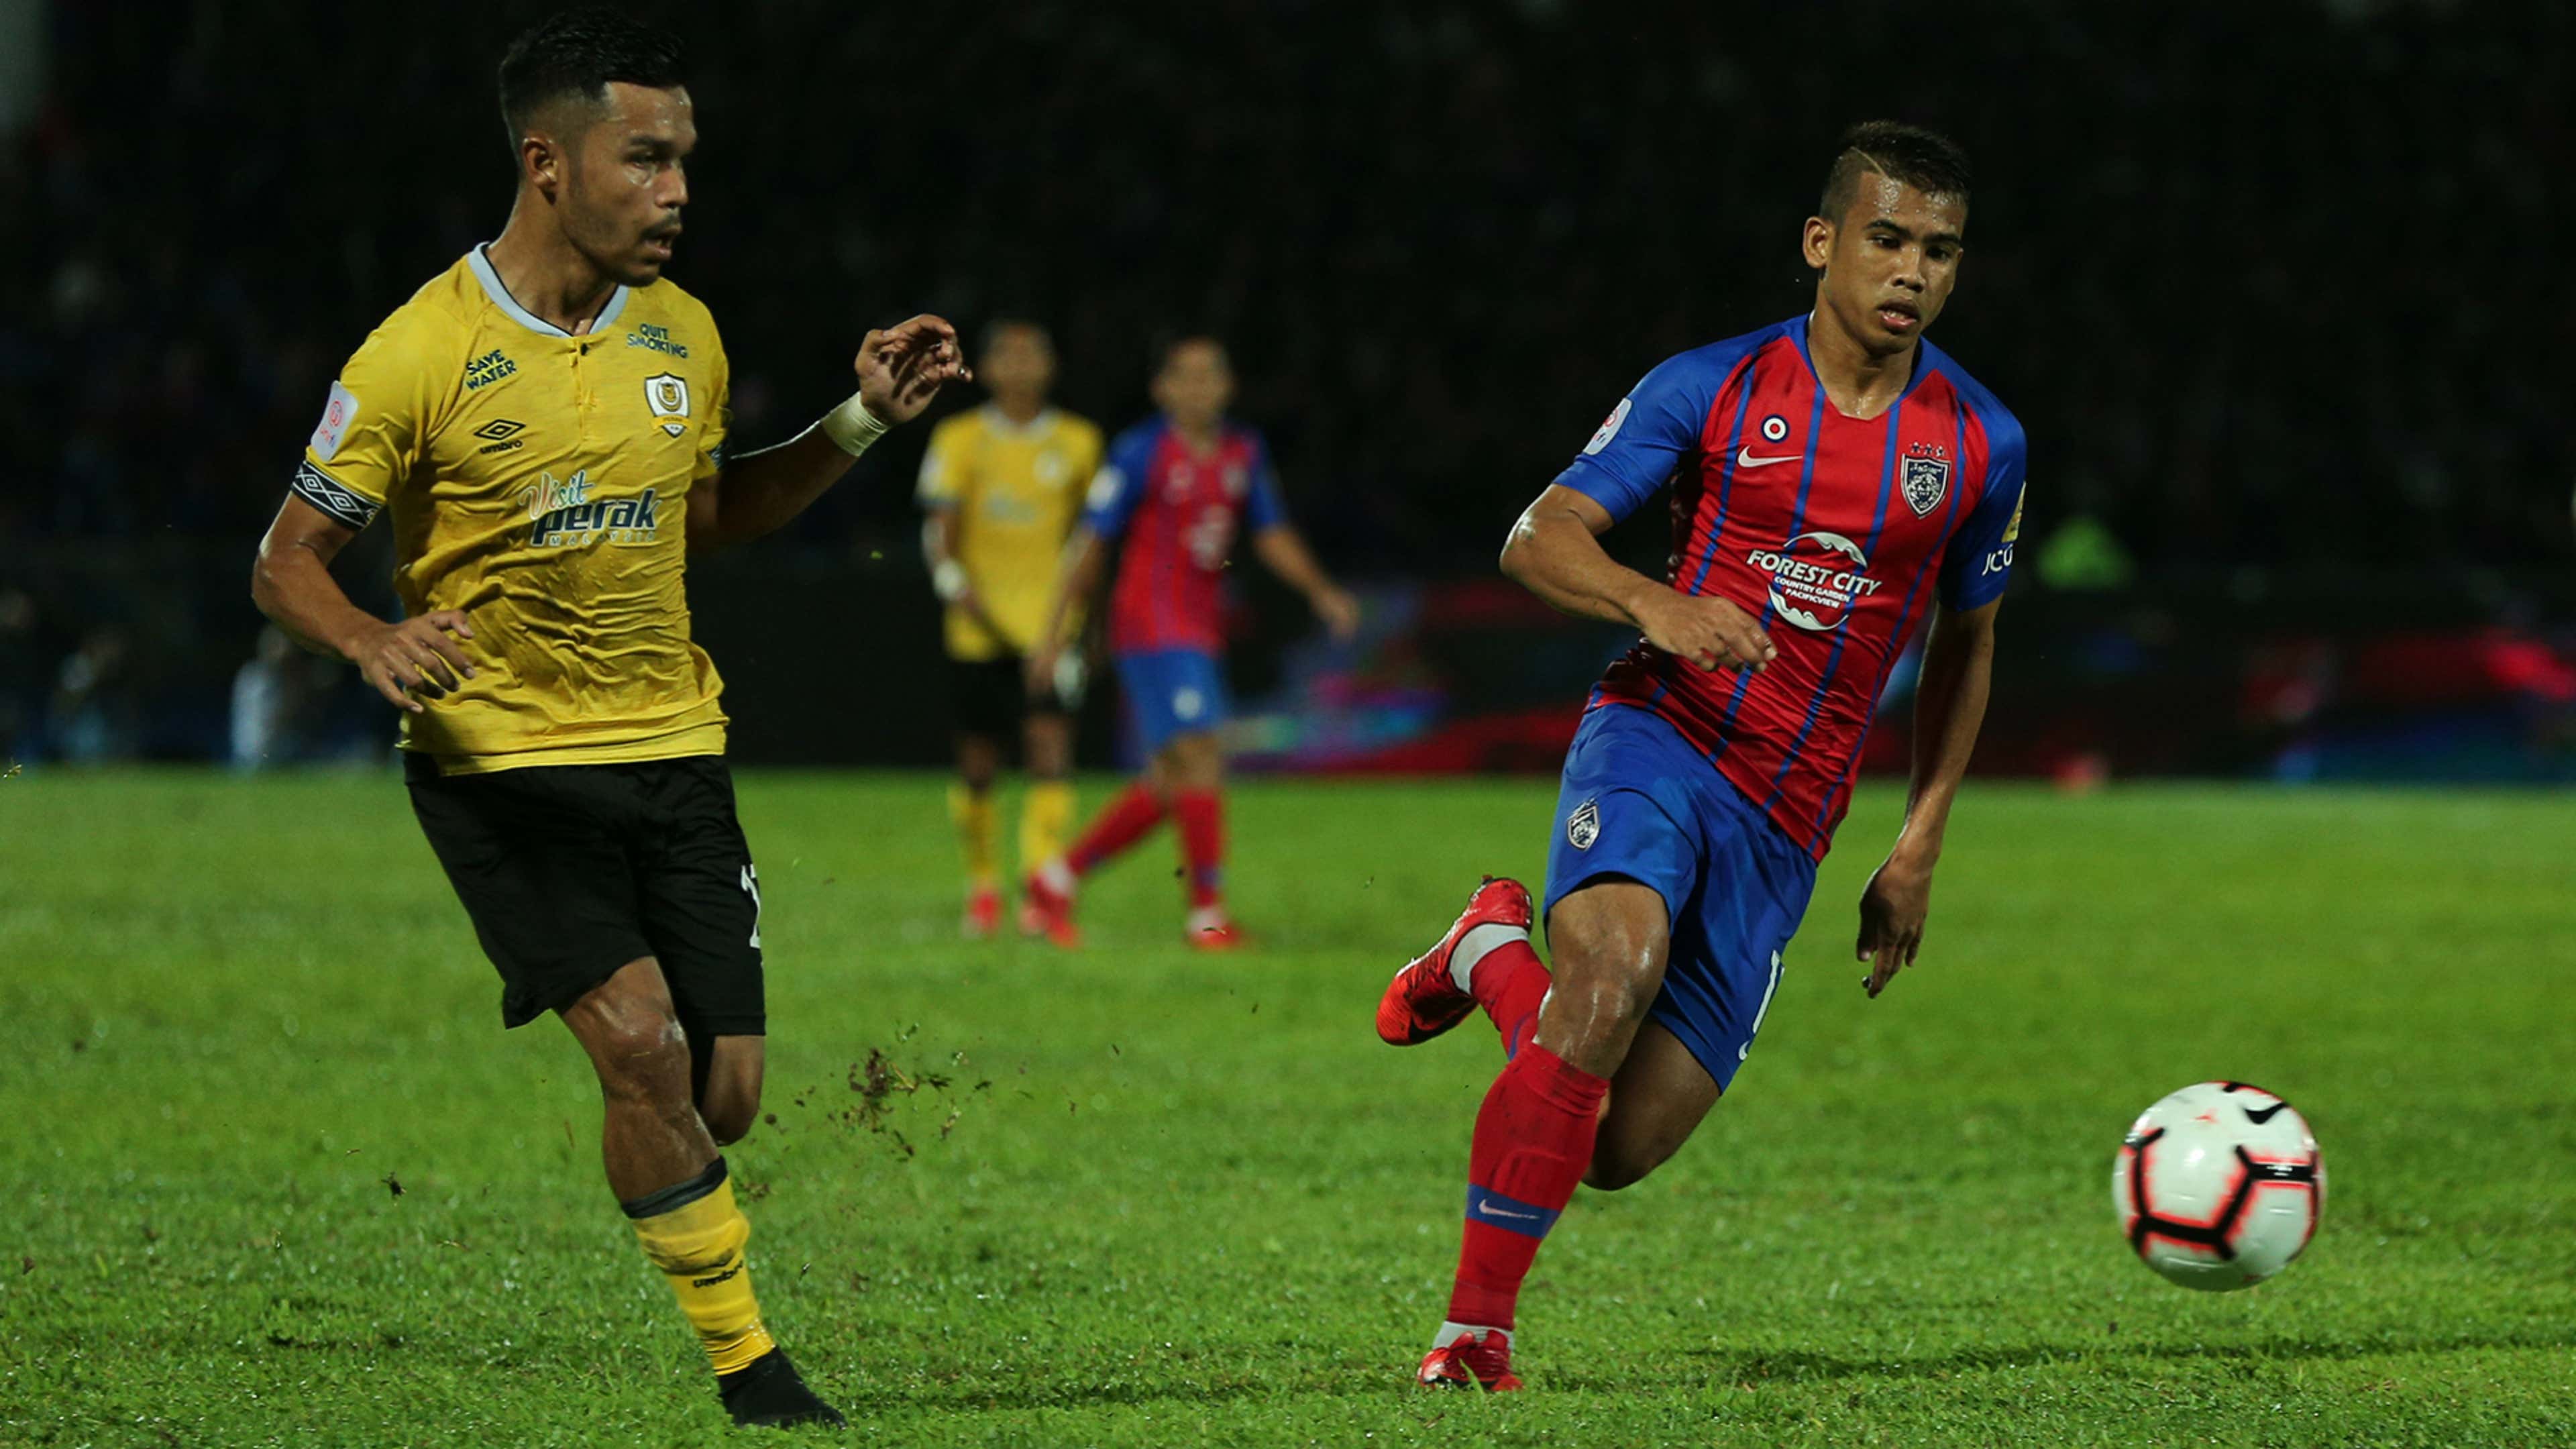 Safawi Rasid, Johor Darul Ta'zim v Perak, Super League, 2 Feb 2019